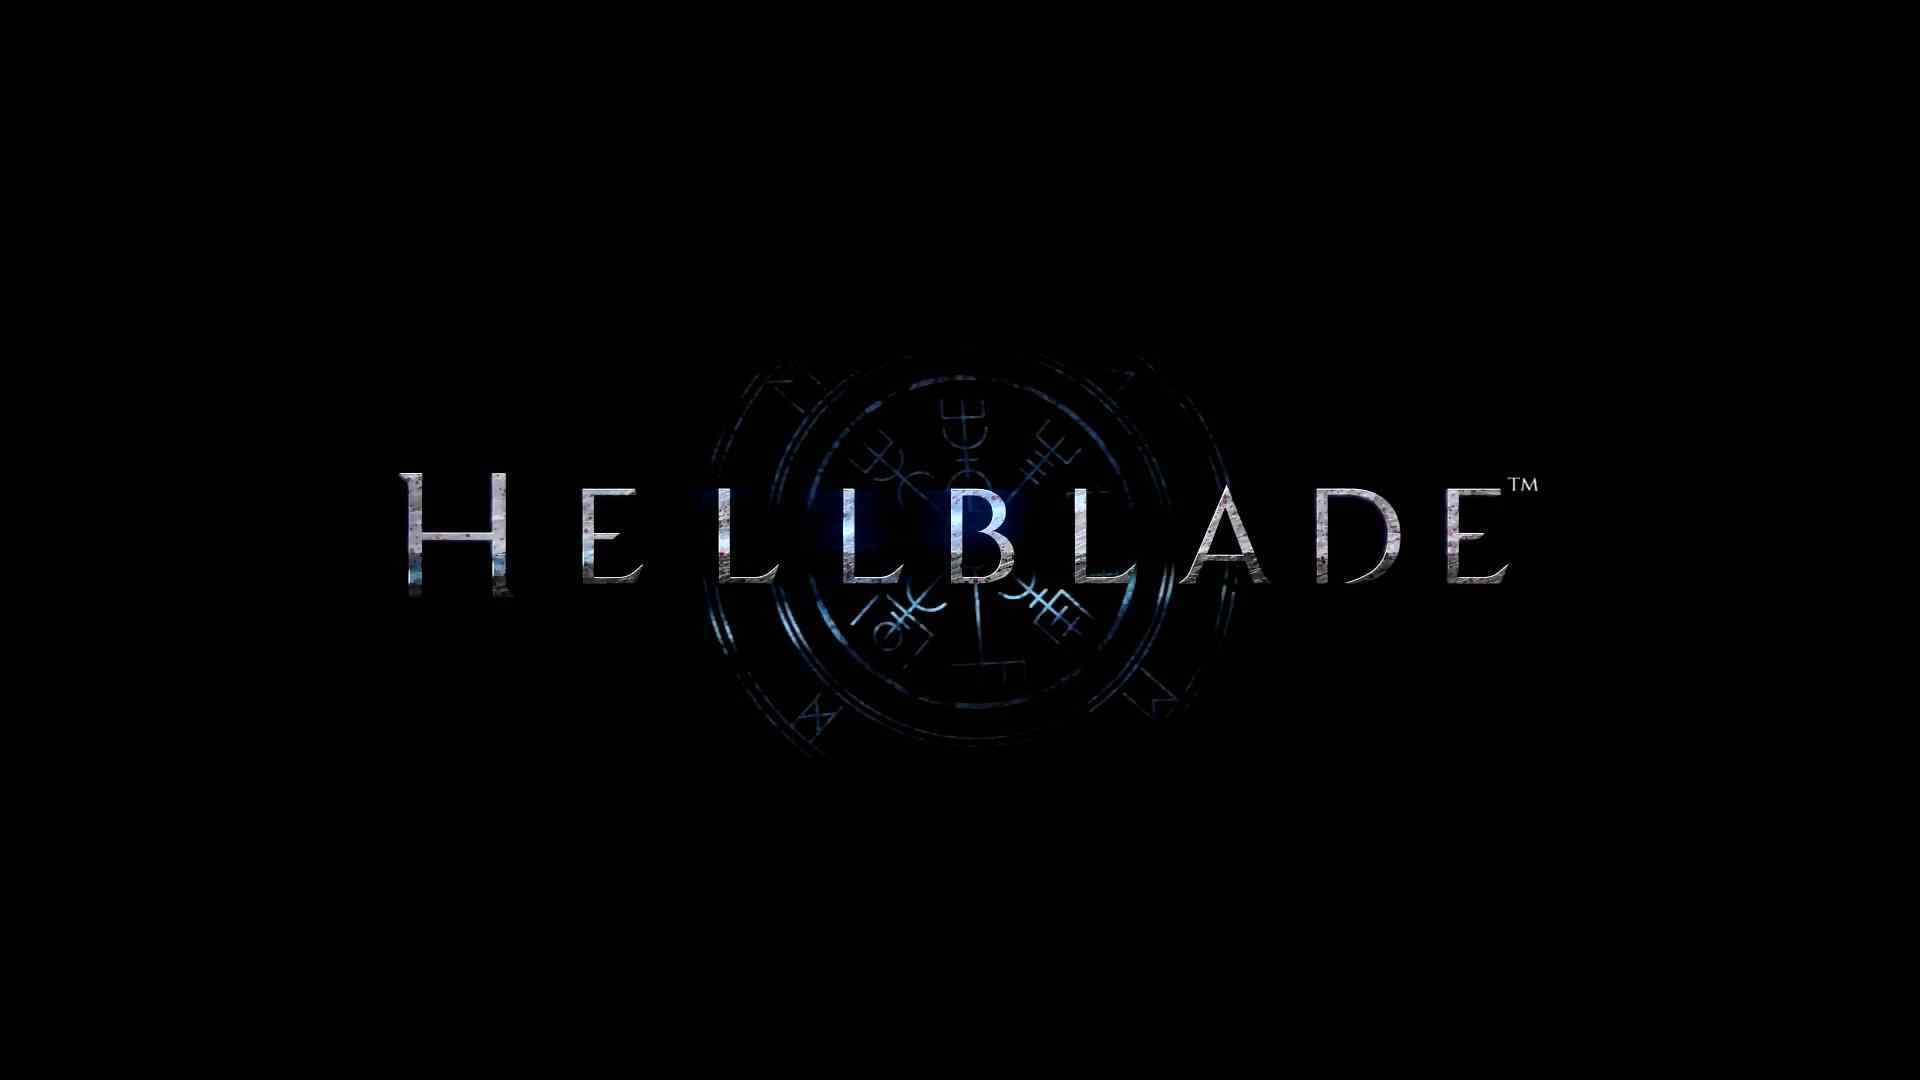 Hellblade: Senua's Sacrifice Wallpaper Image Photo Picture